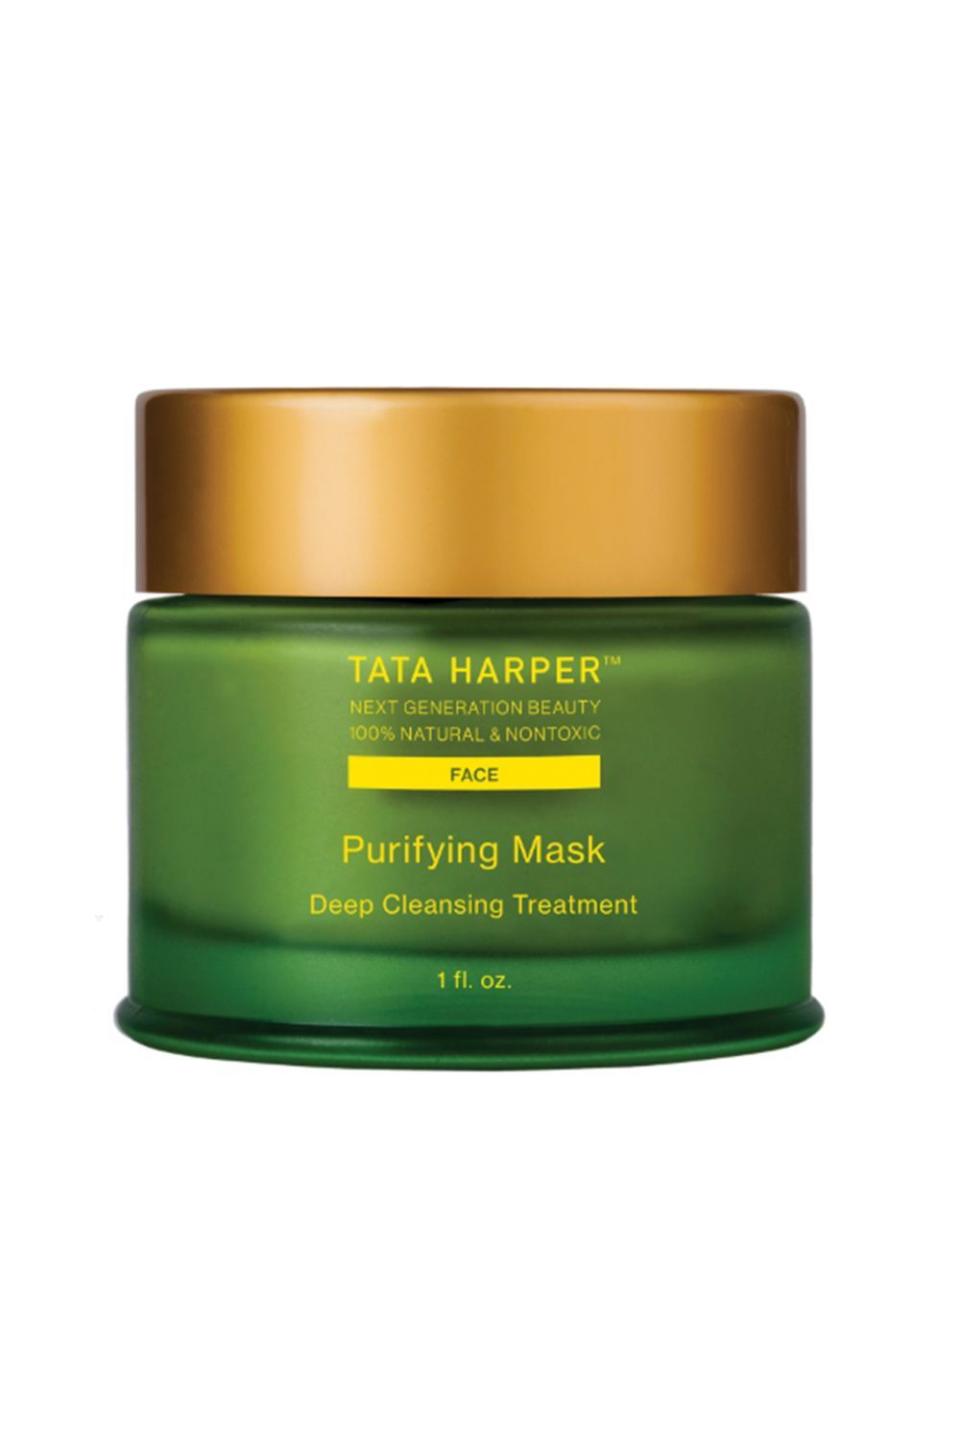 12) Tata Harper Purifying Pore & Blackhead Detox Mask